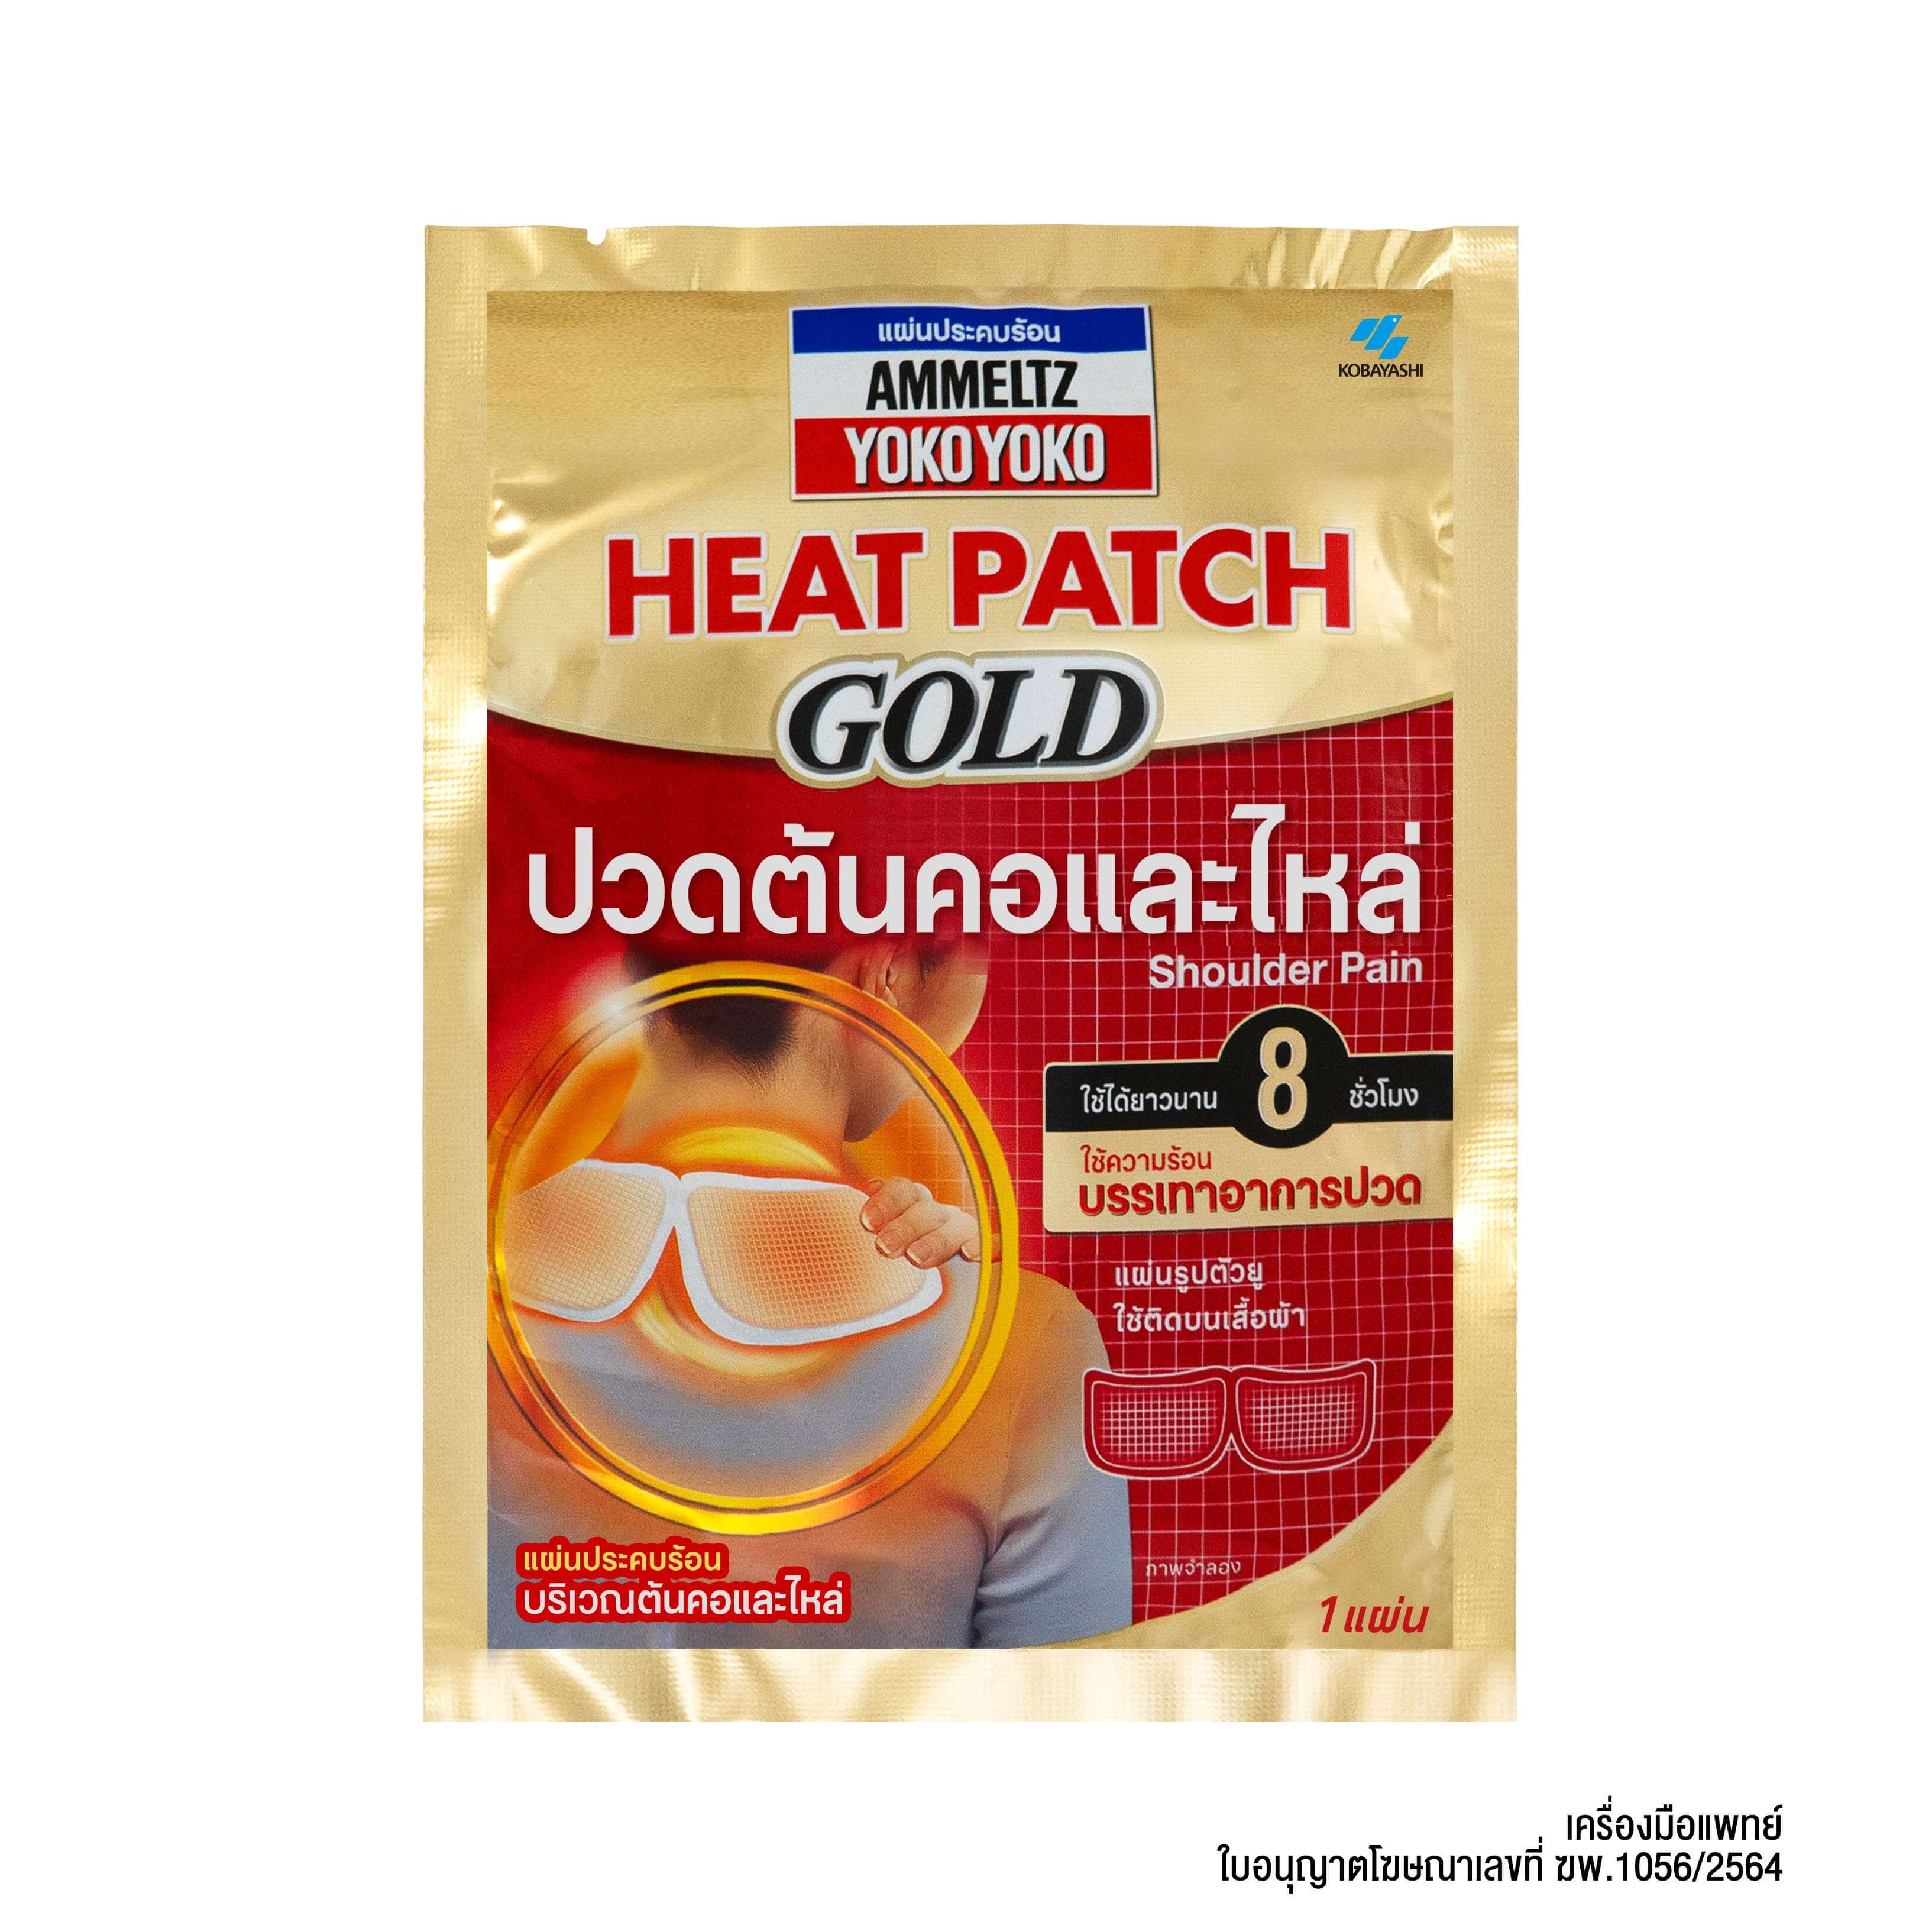 AMMELTZ Heatpatch Gold: Shoulder Pain - 1 pc_免税价格_亿点免税